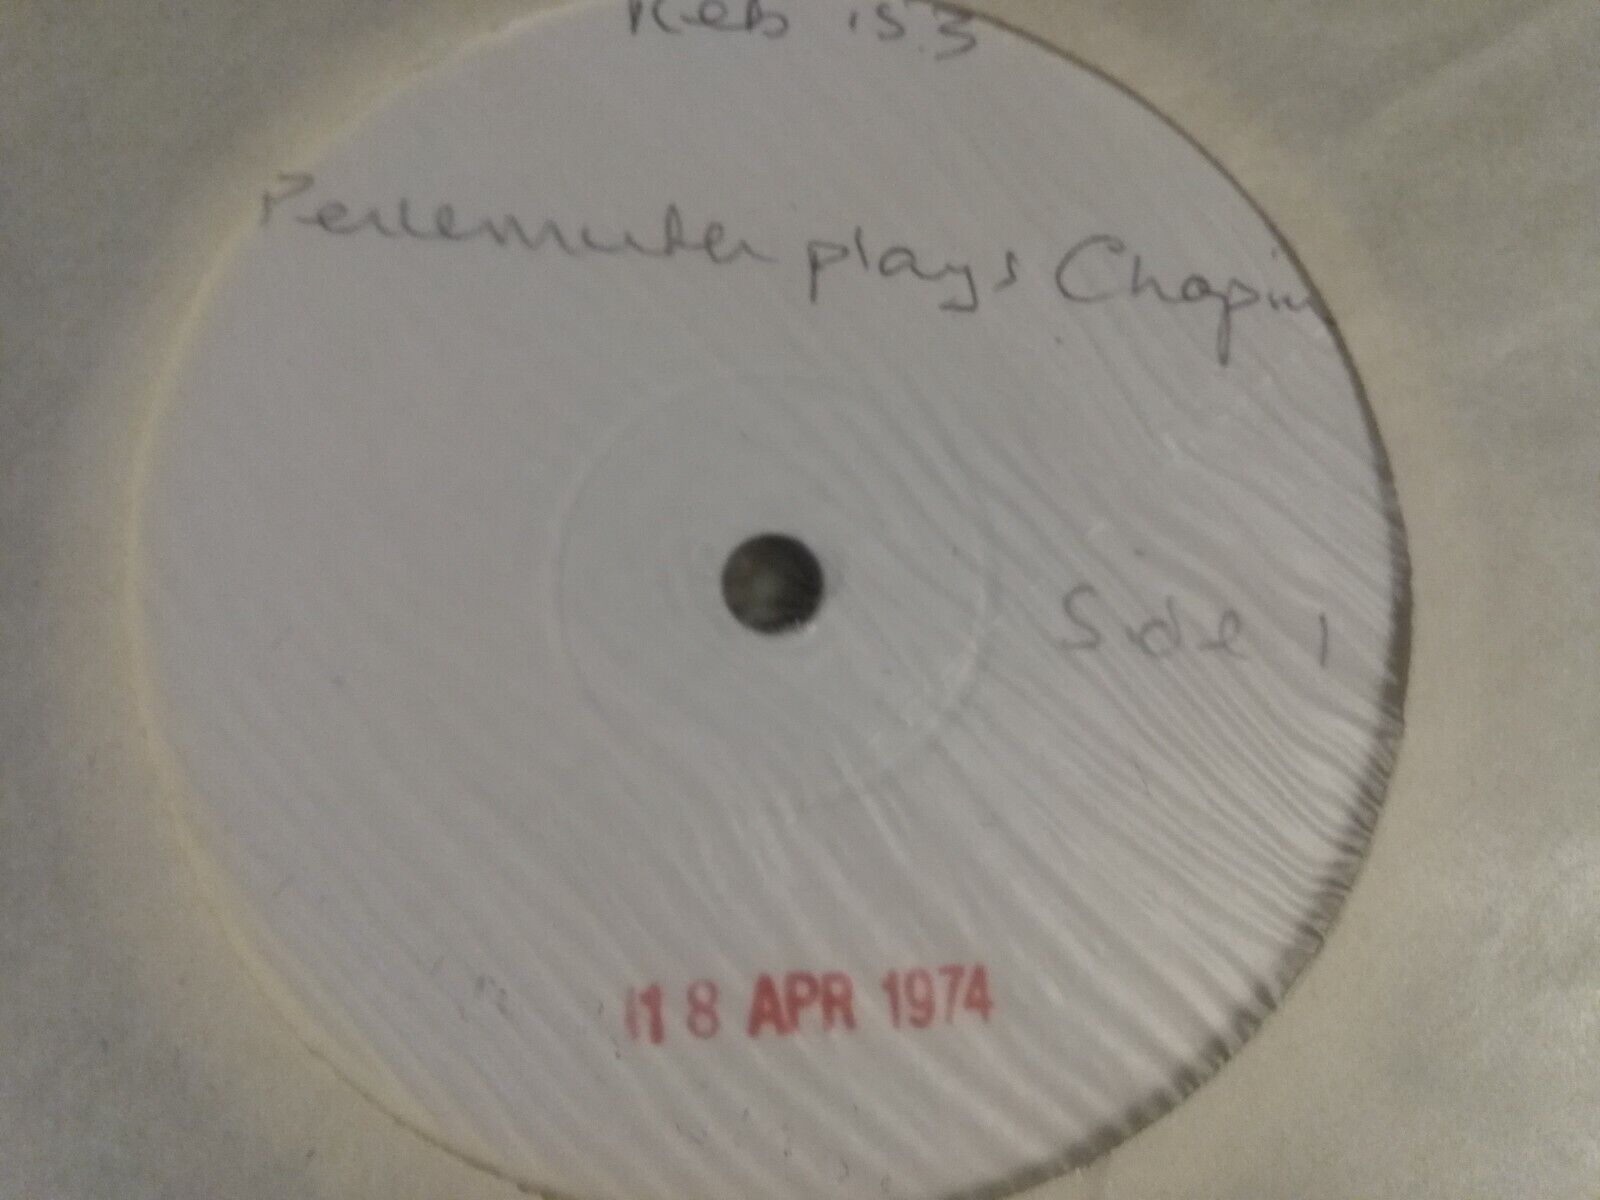 Pic 2 Perlemuter Plays Chopin Vlado Perlemuter  BBC Records REB 153 S test copy NM